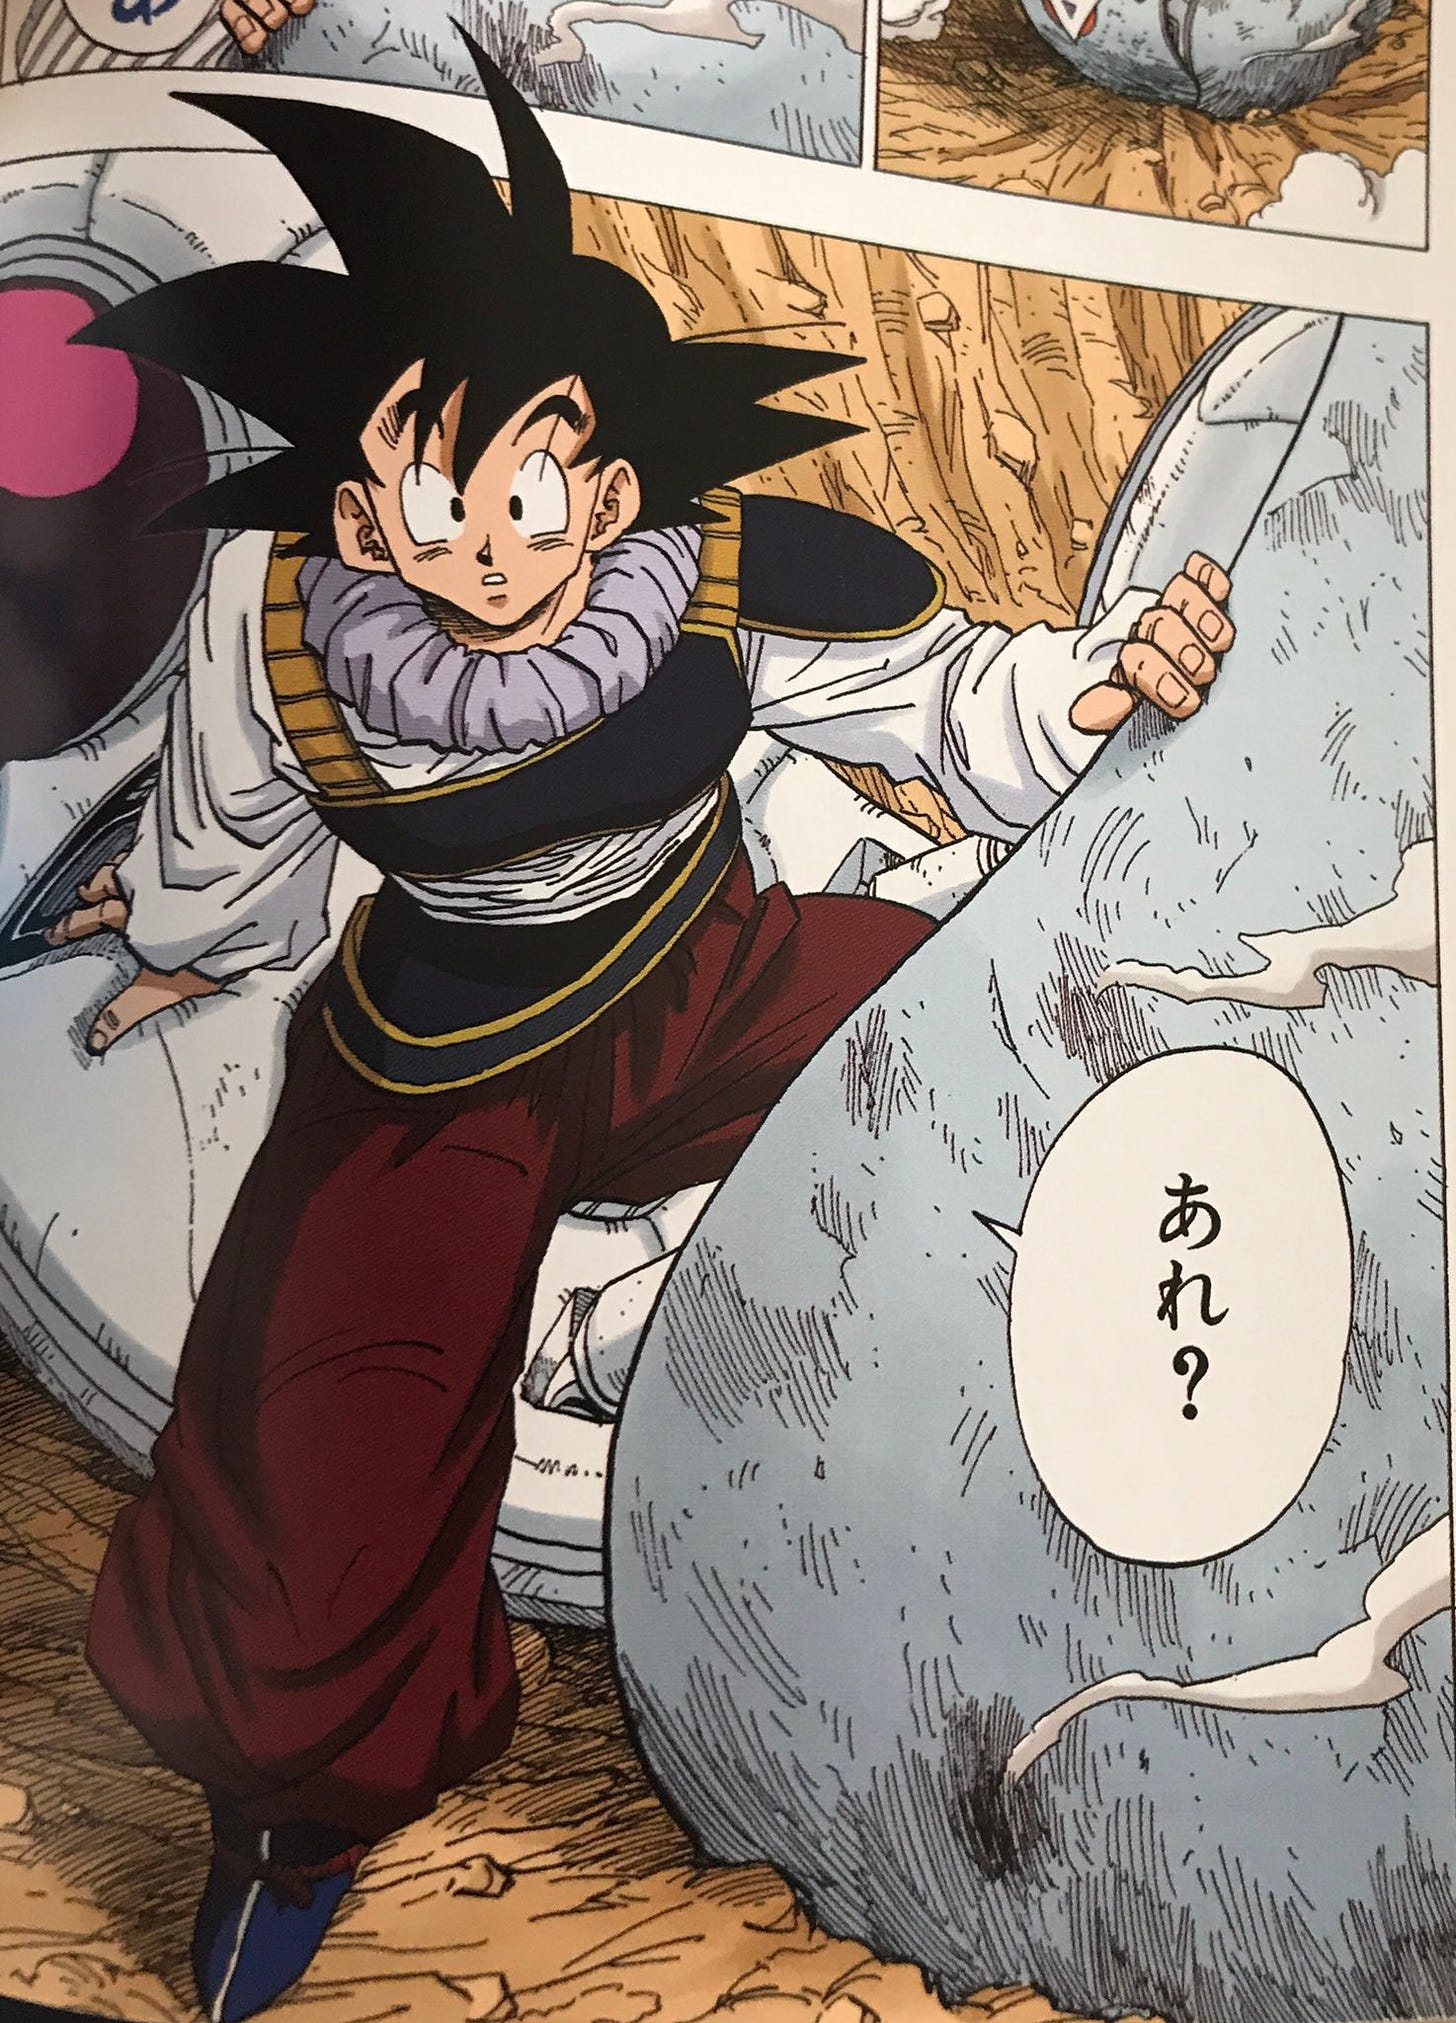 Yardrat outfit for Goku is my favorite design by far. : r/Dragonballsuper